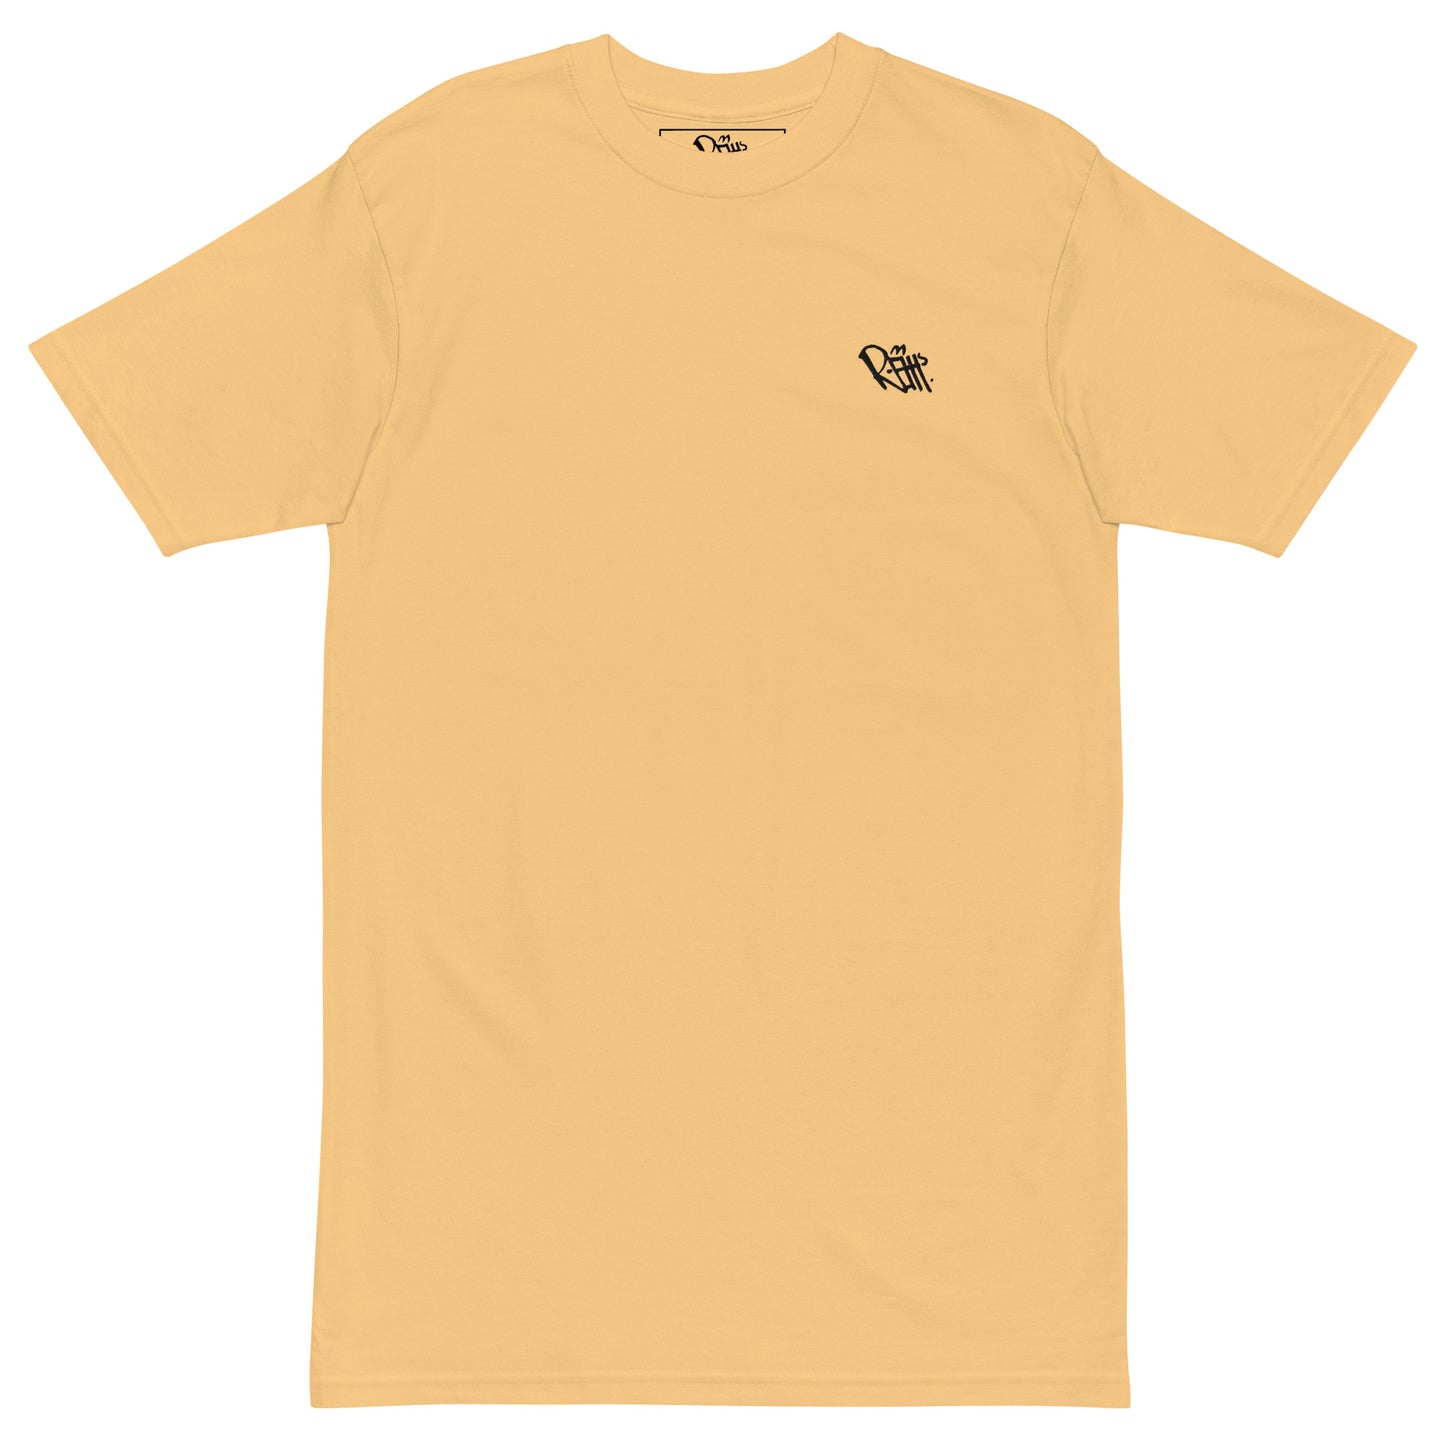 REHH Logo - Tee Shirt(Vintage Gold)